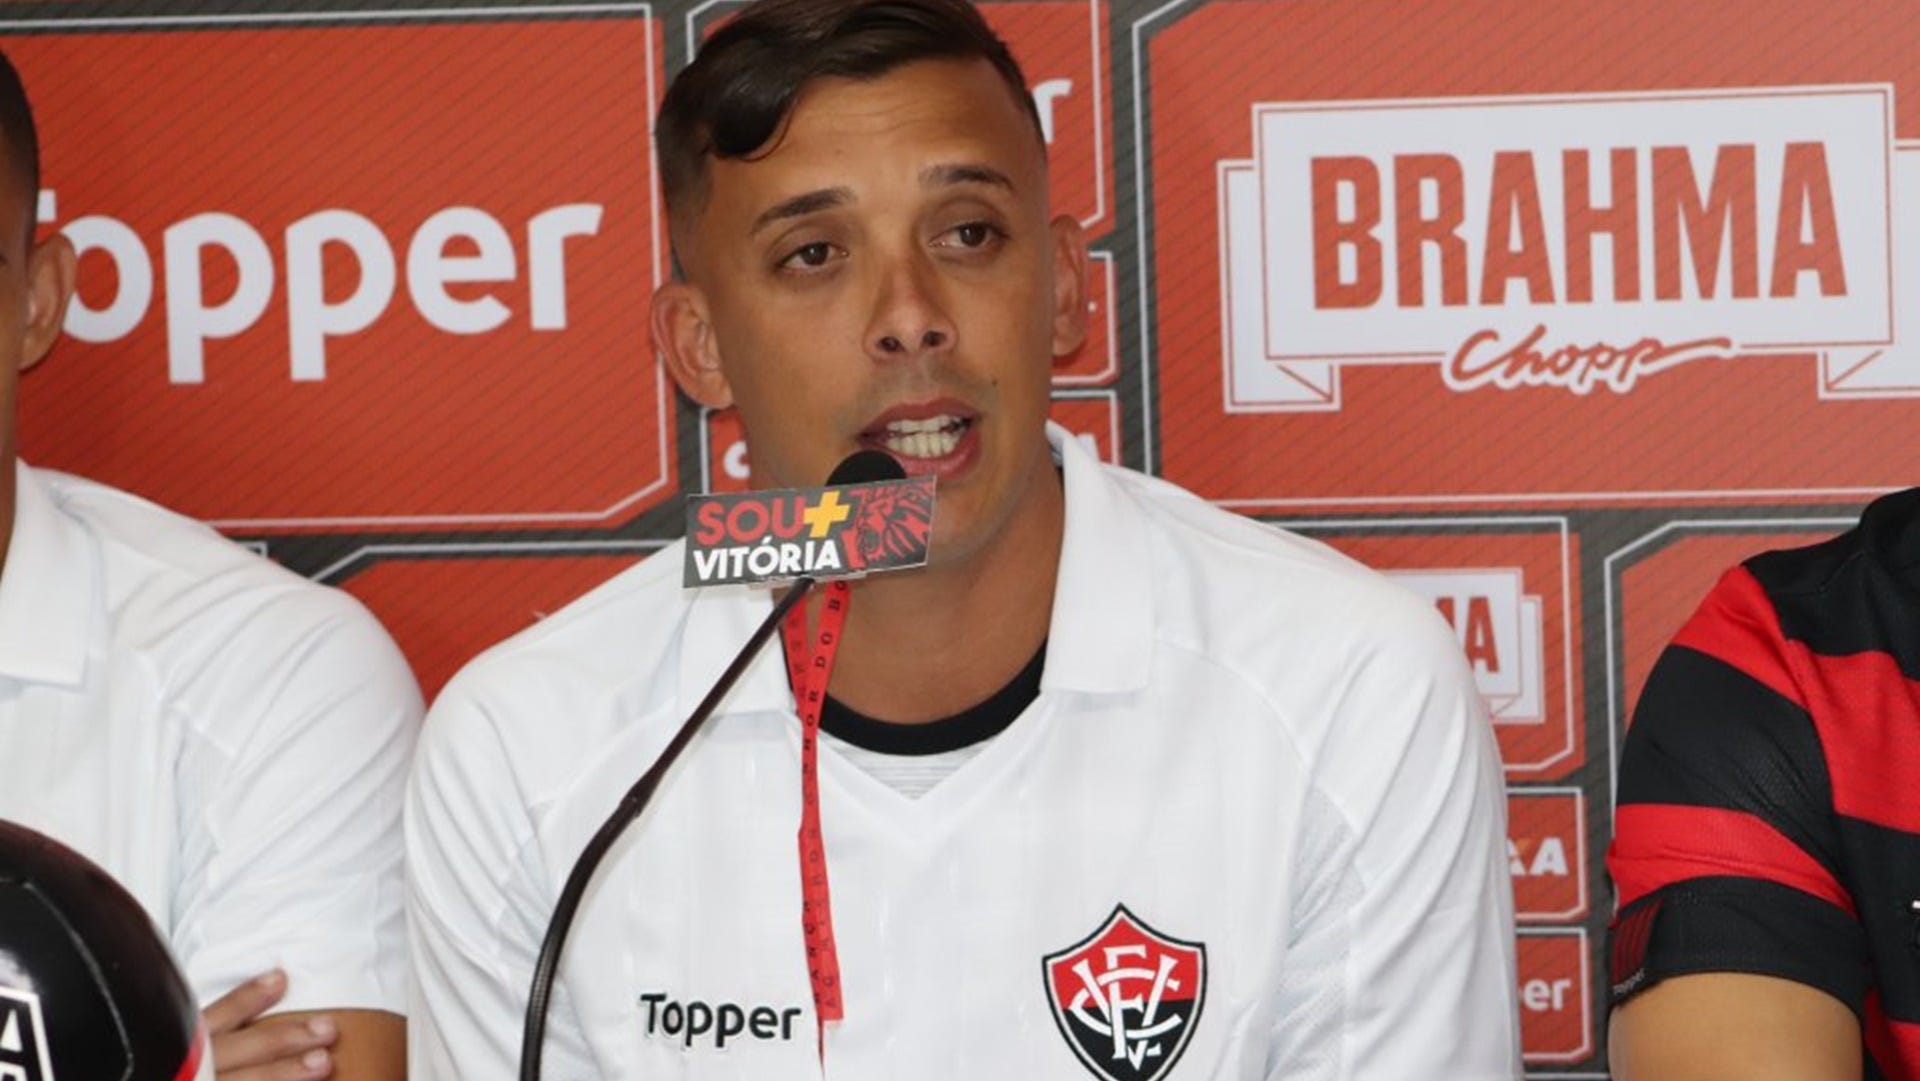 Pedro Potelho | Arsenal | Rio Branco